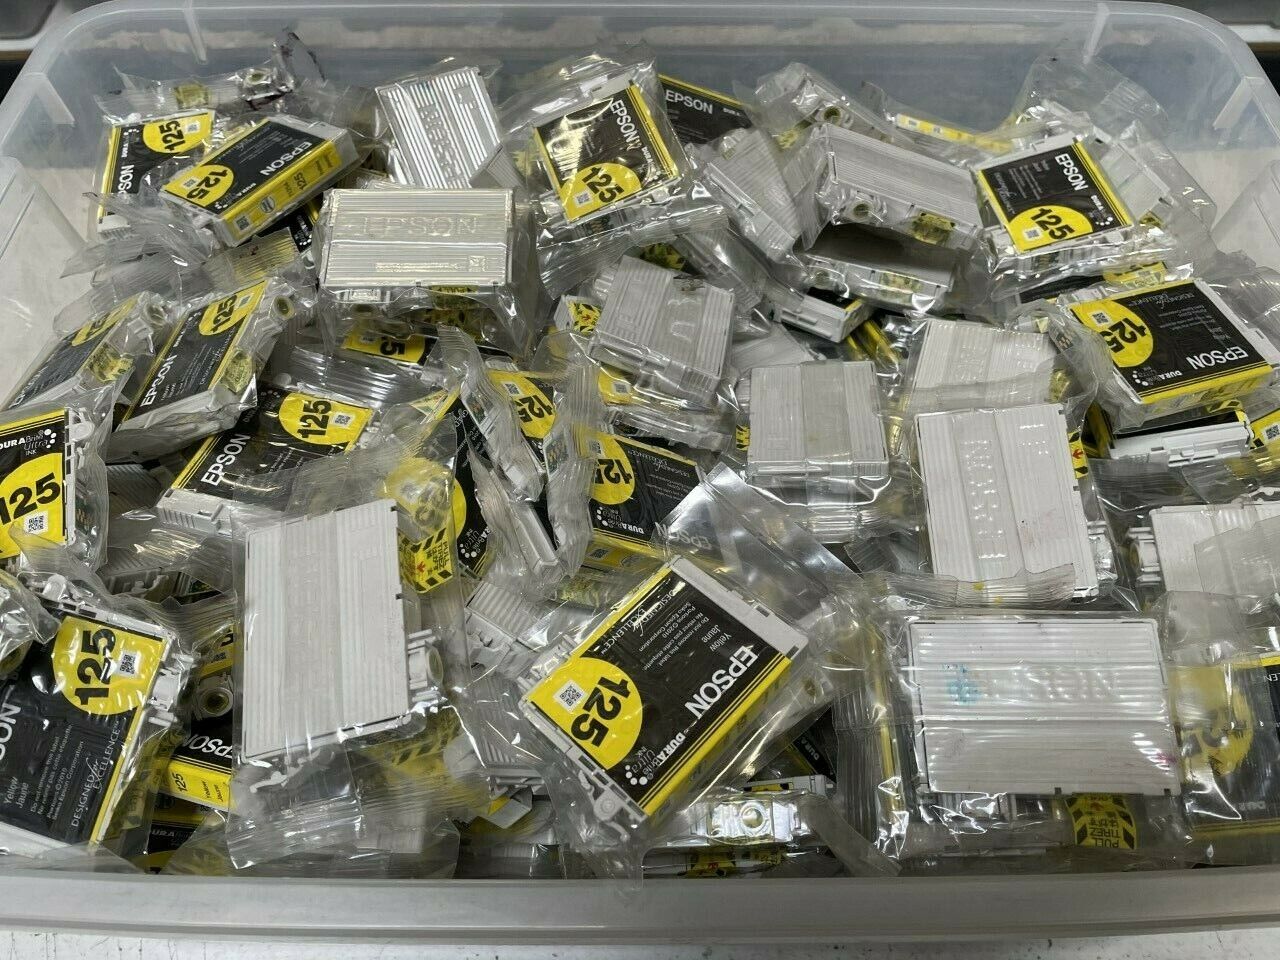 Yellow Genuine Epson 125 Ink Cartridge Lot Of 100 In BAG